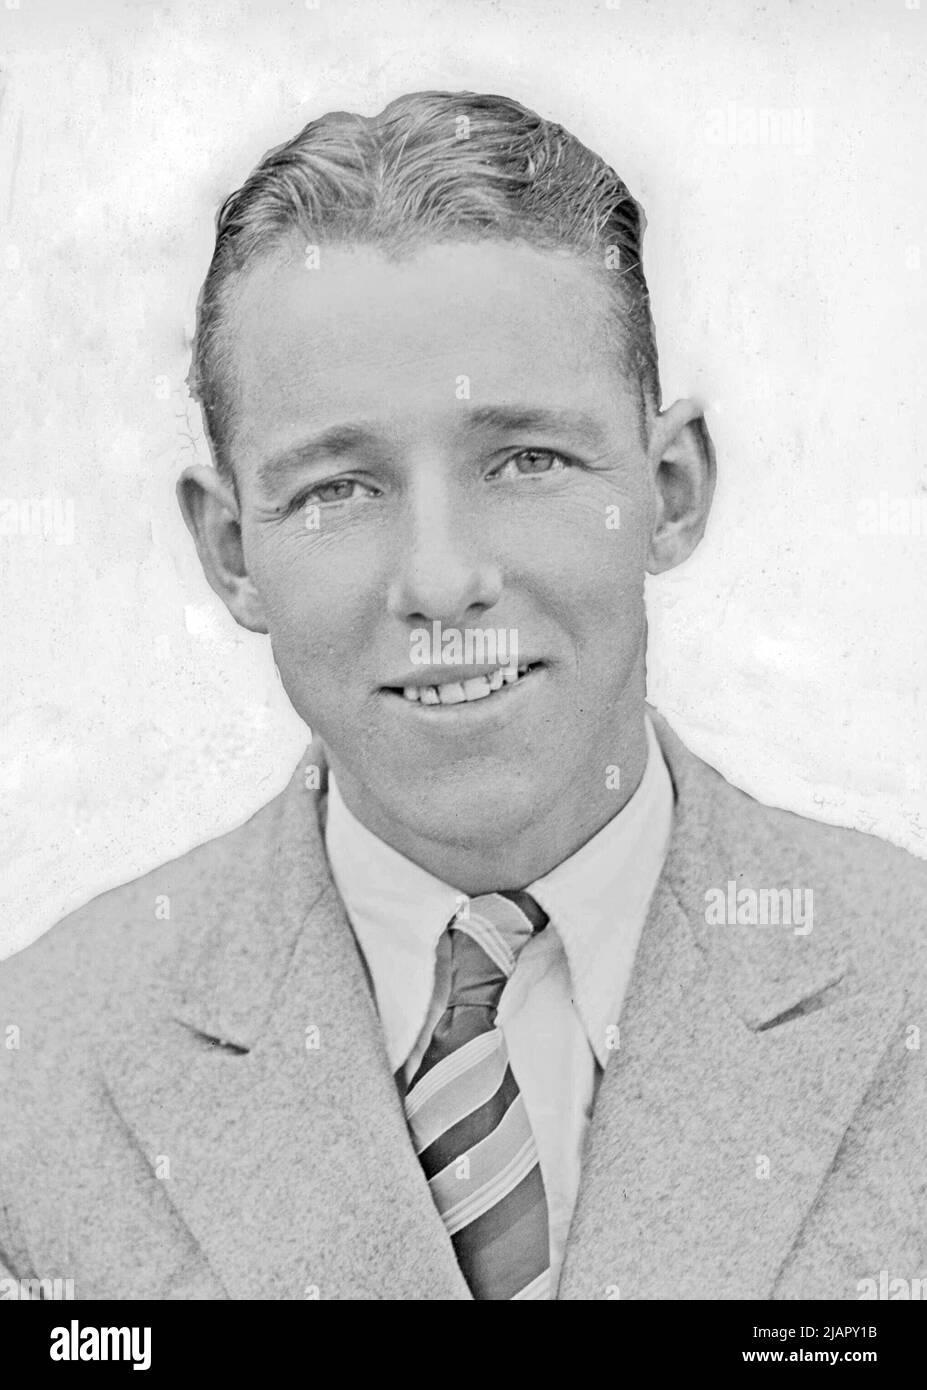 Cricketer australiano Archie Jackson ca. 1933 Foto Stock